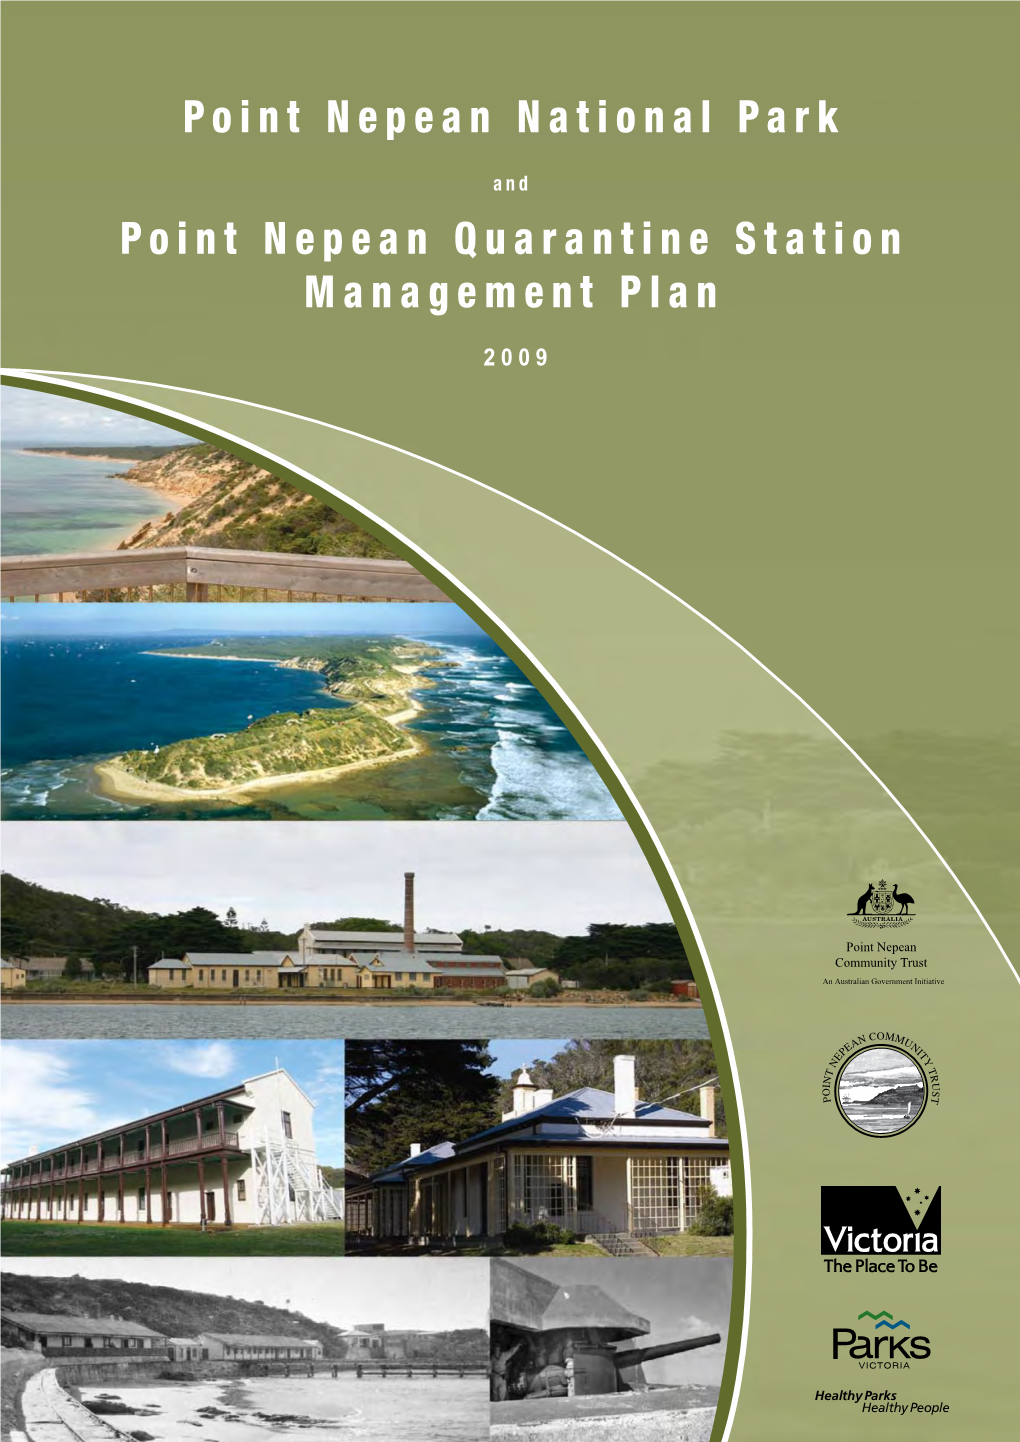 Point Nepean Quarantine Station Management Plan